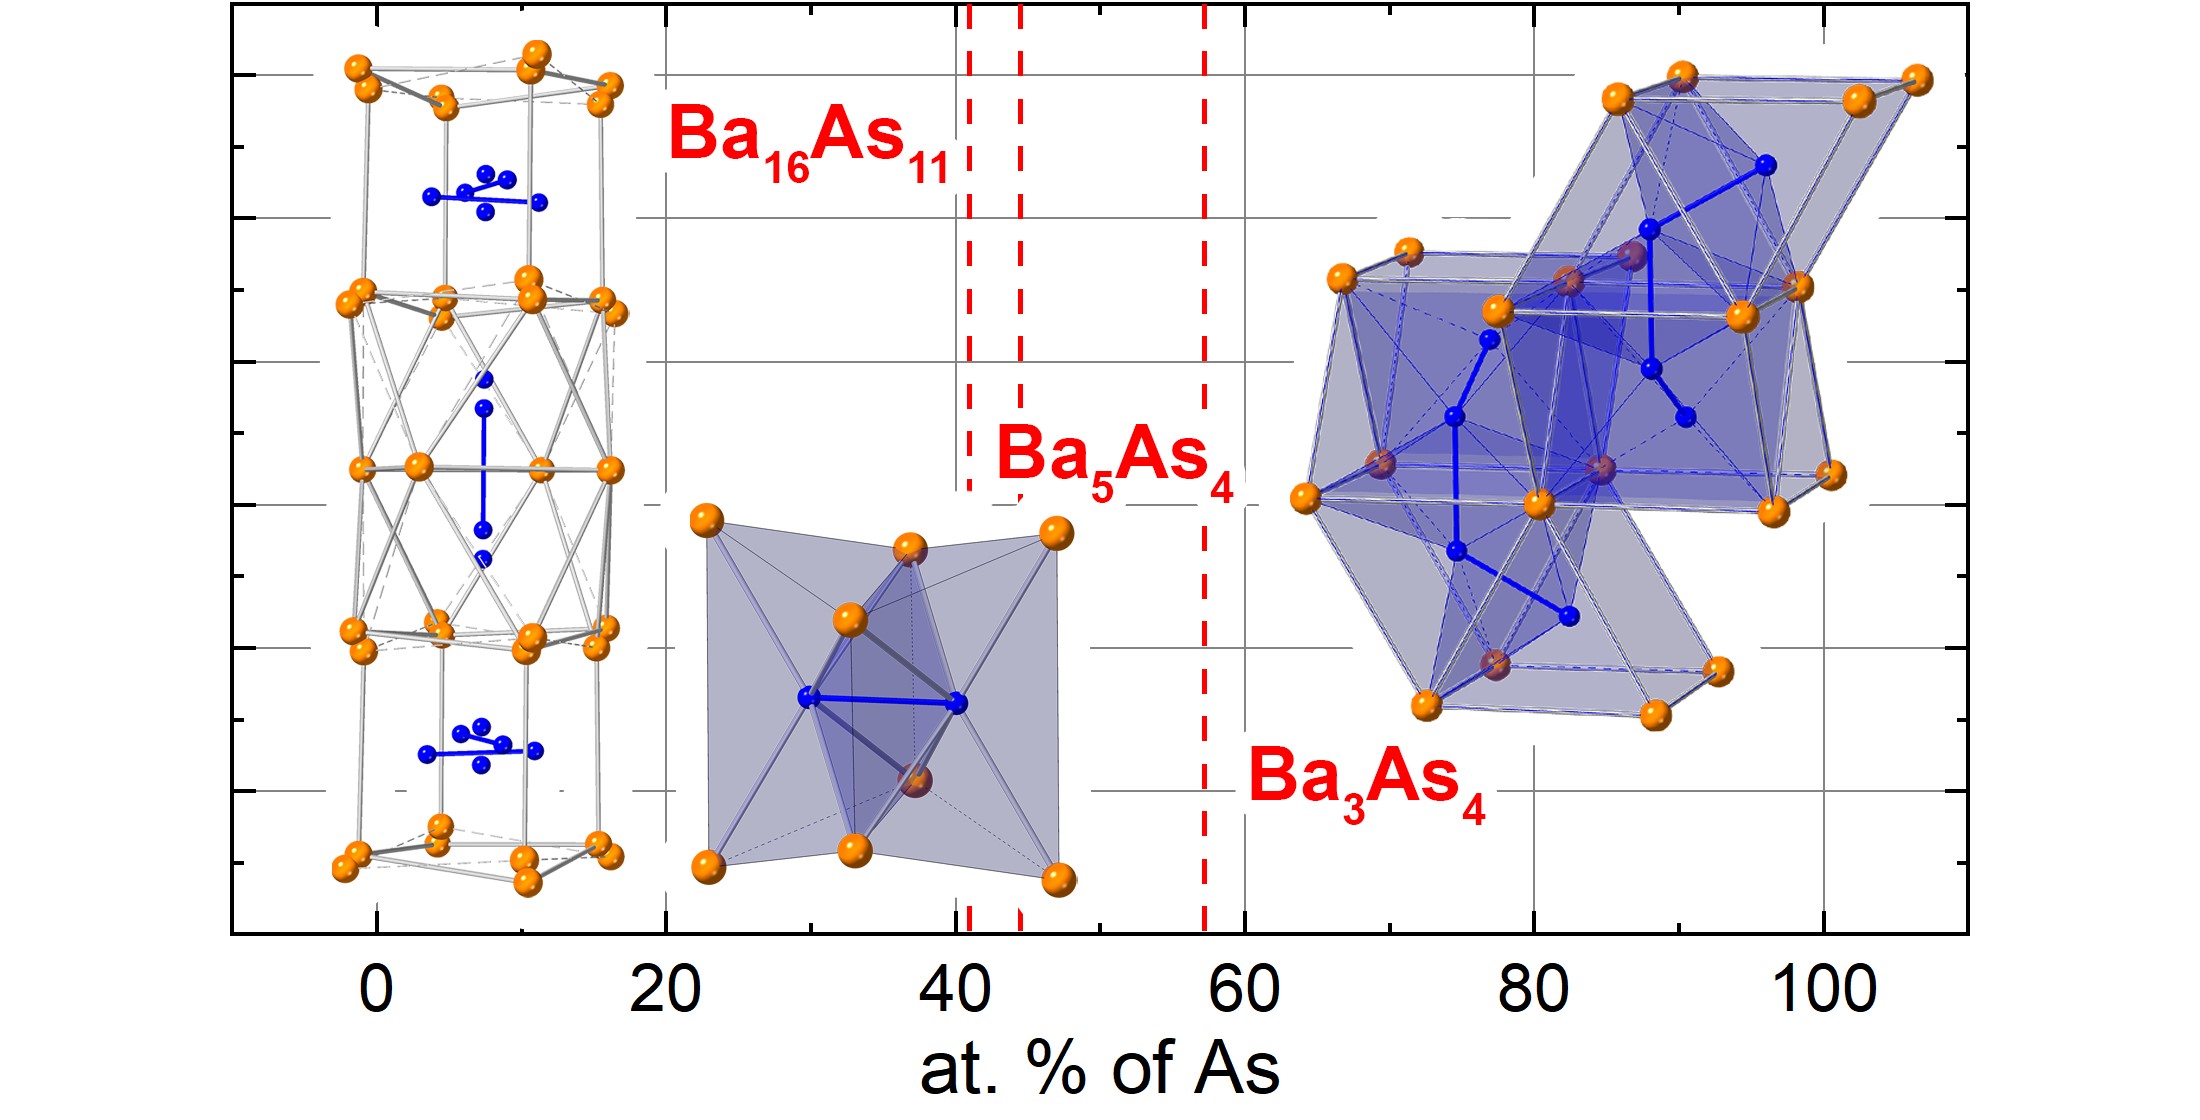 three novel barium arsenides, Ba3As4, Ba5As4, and Ba16As11